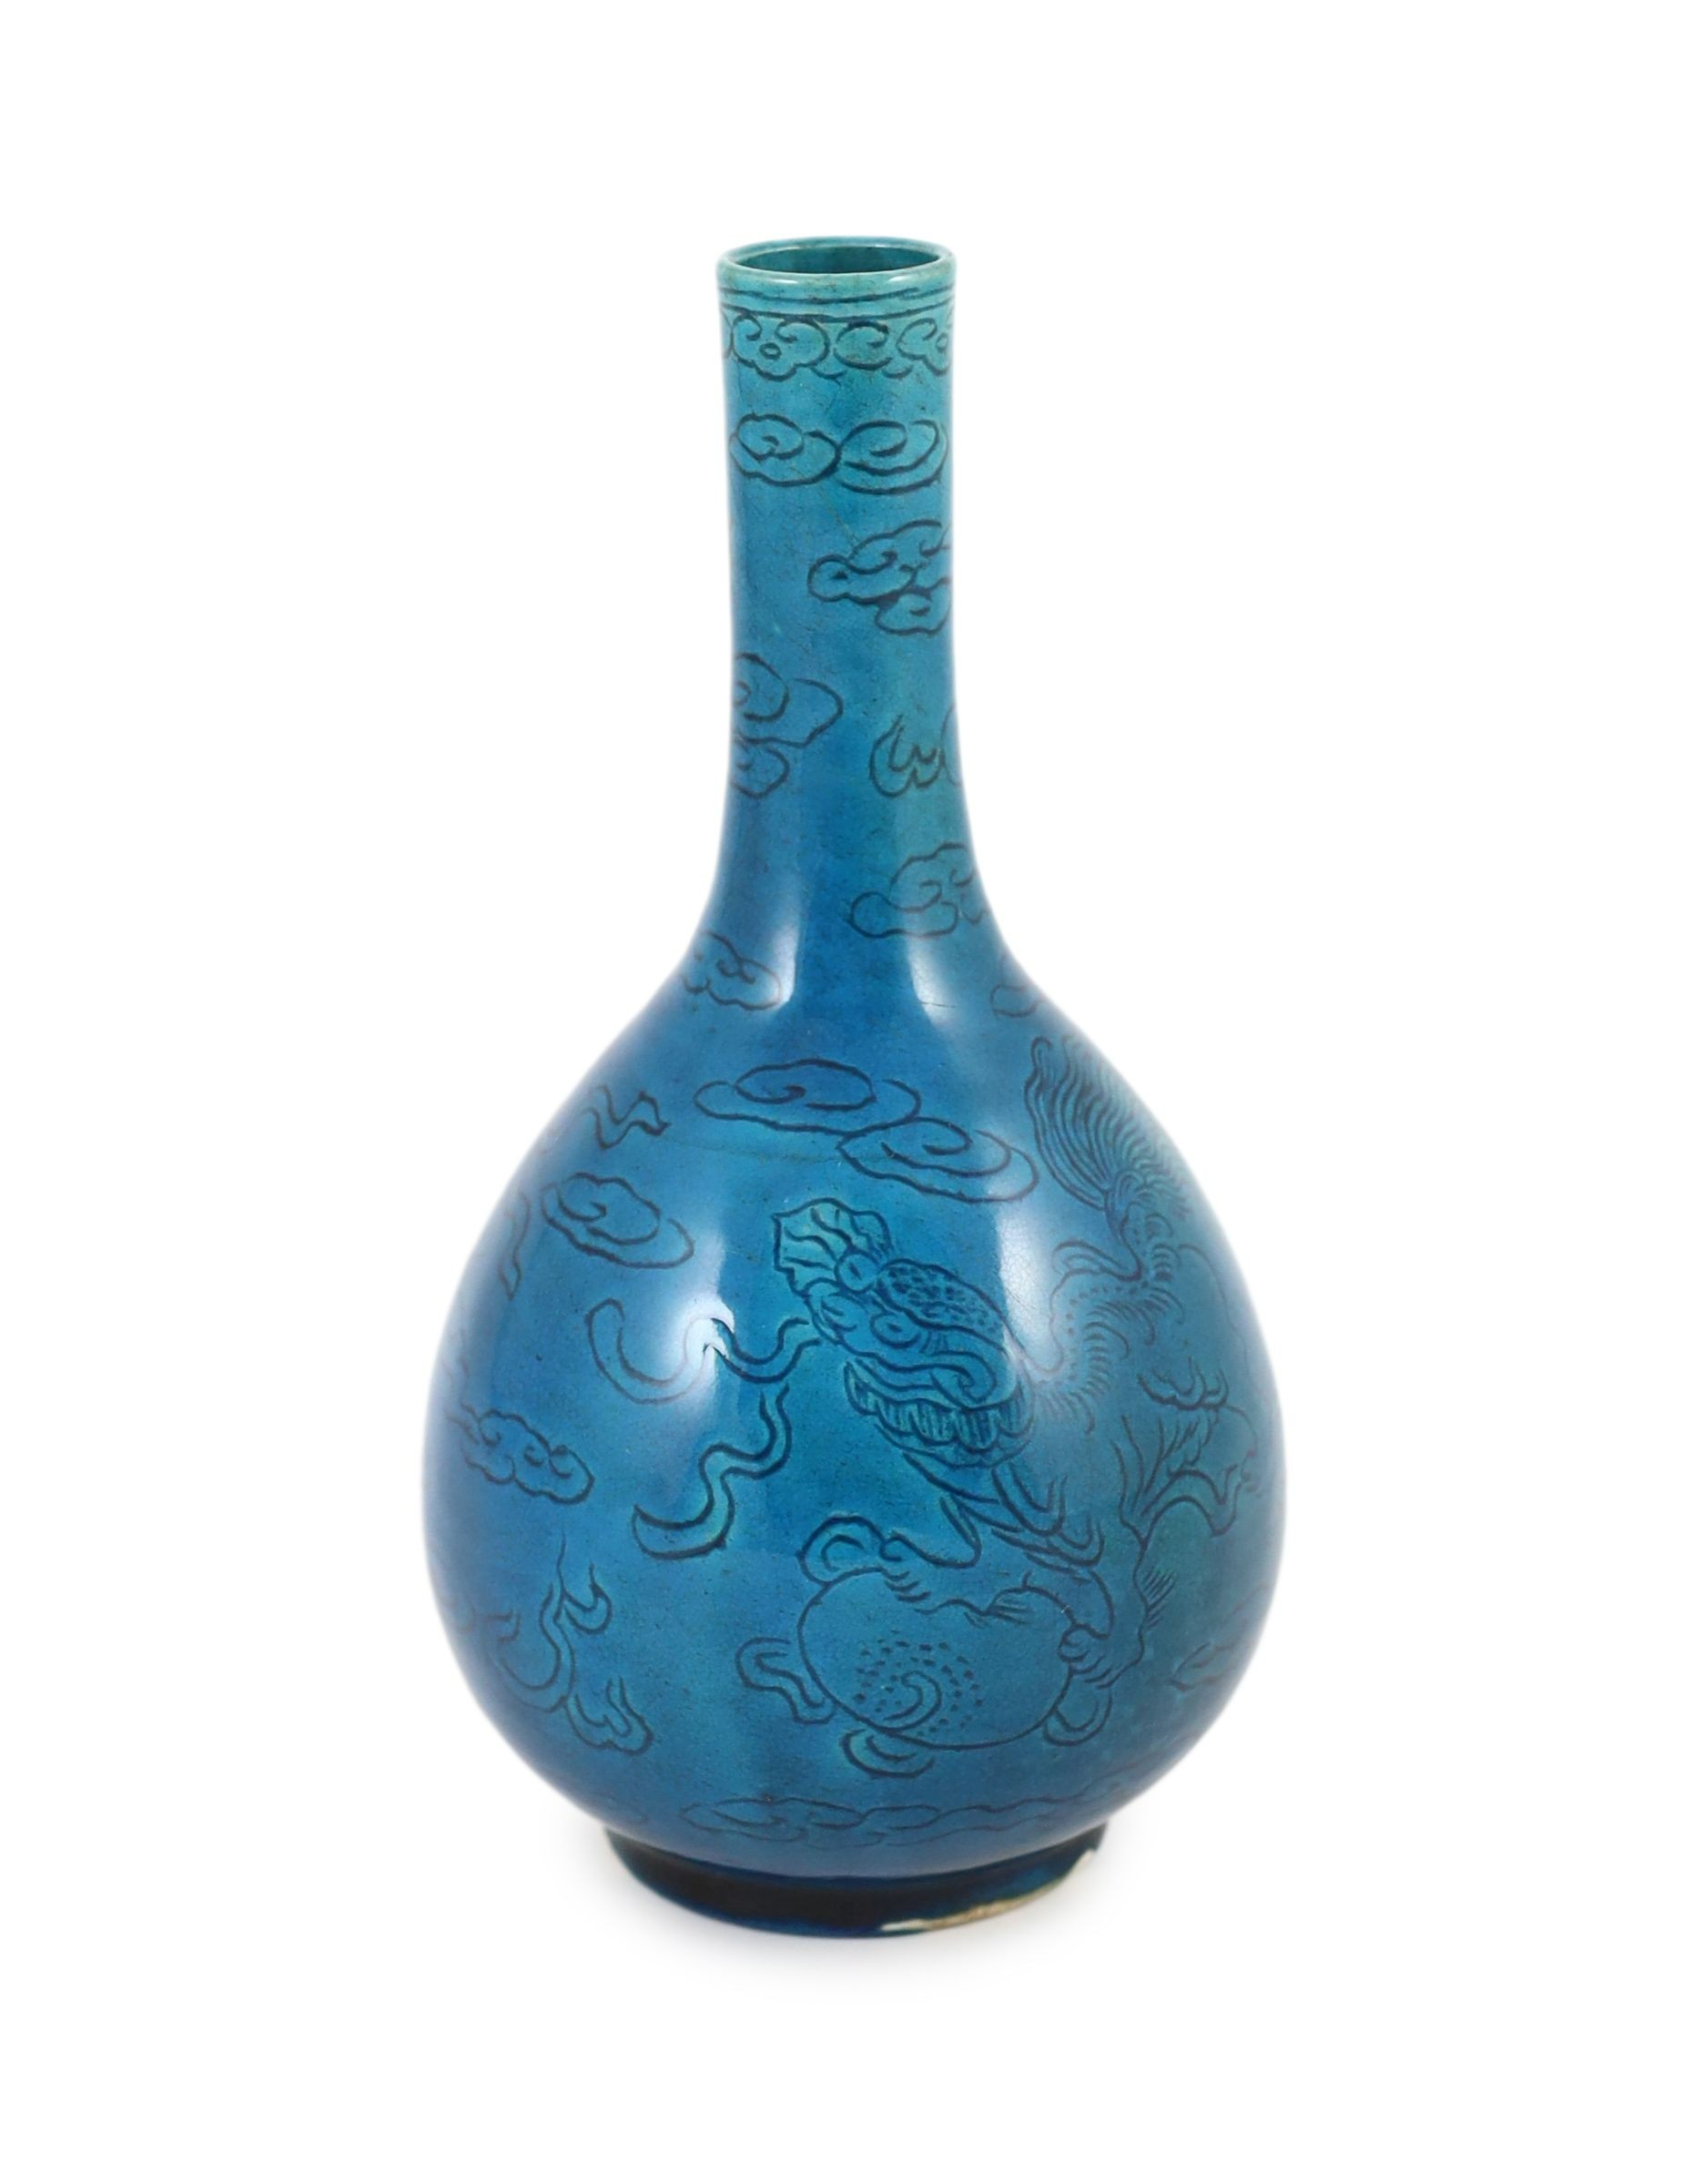 A Chinese turquoise glazed sgraffito bottle vase, 19th century, 21 cm high